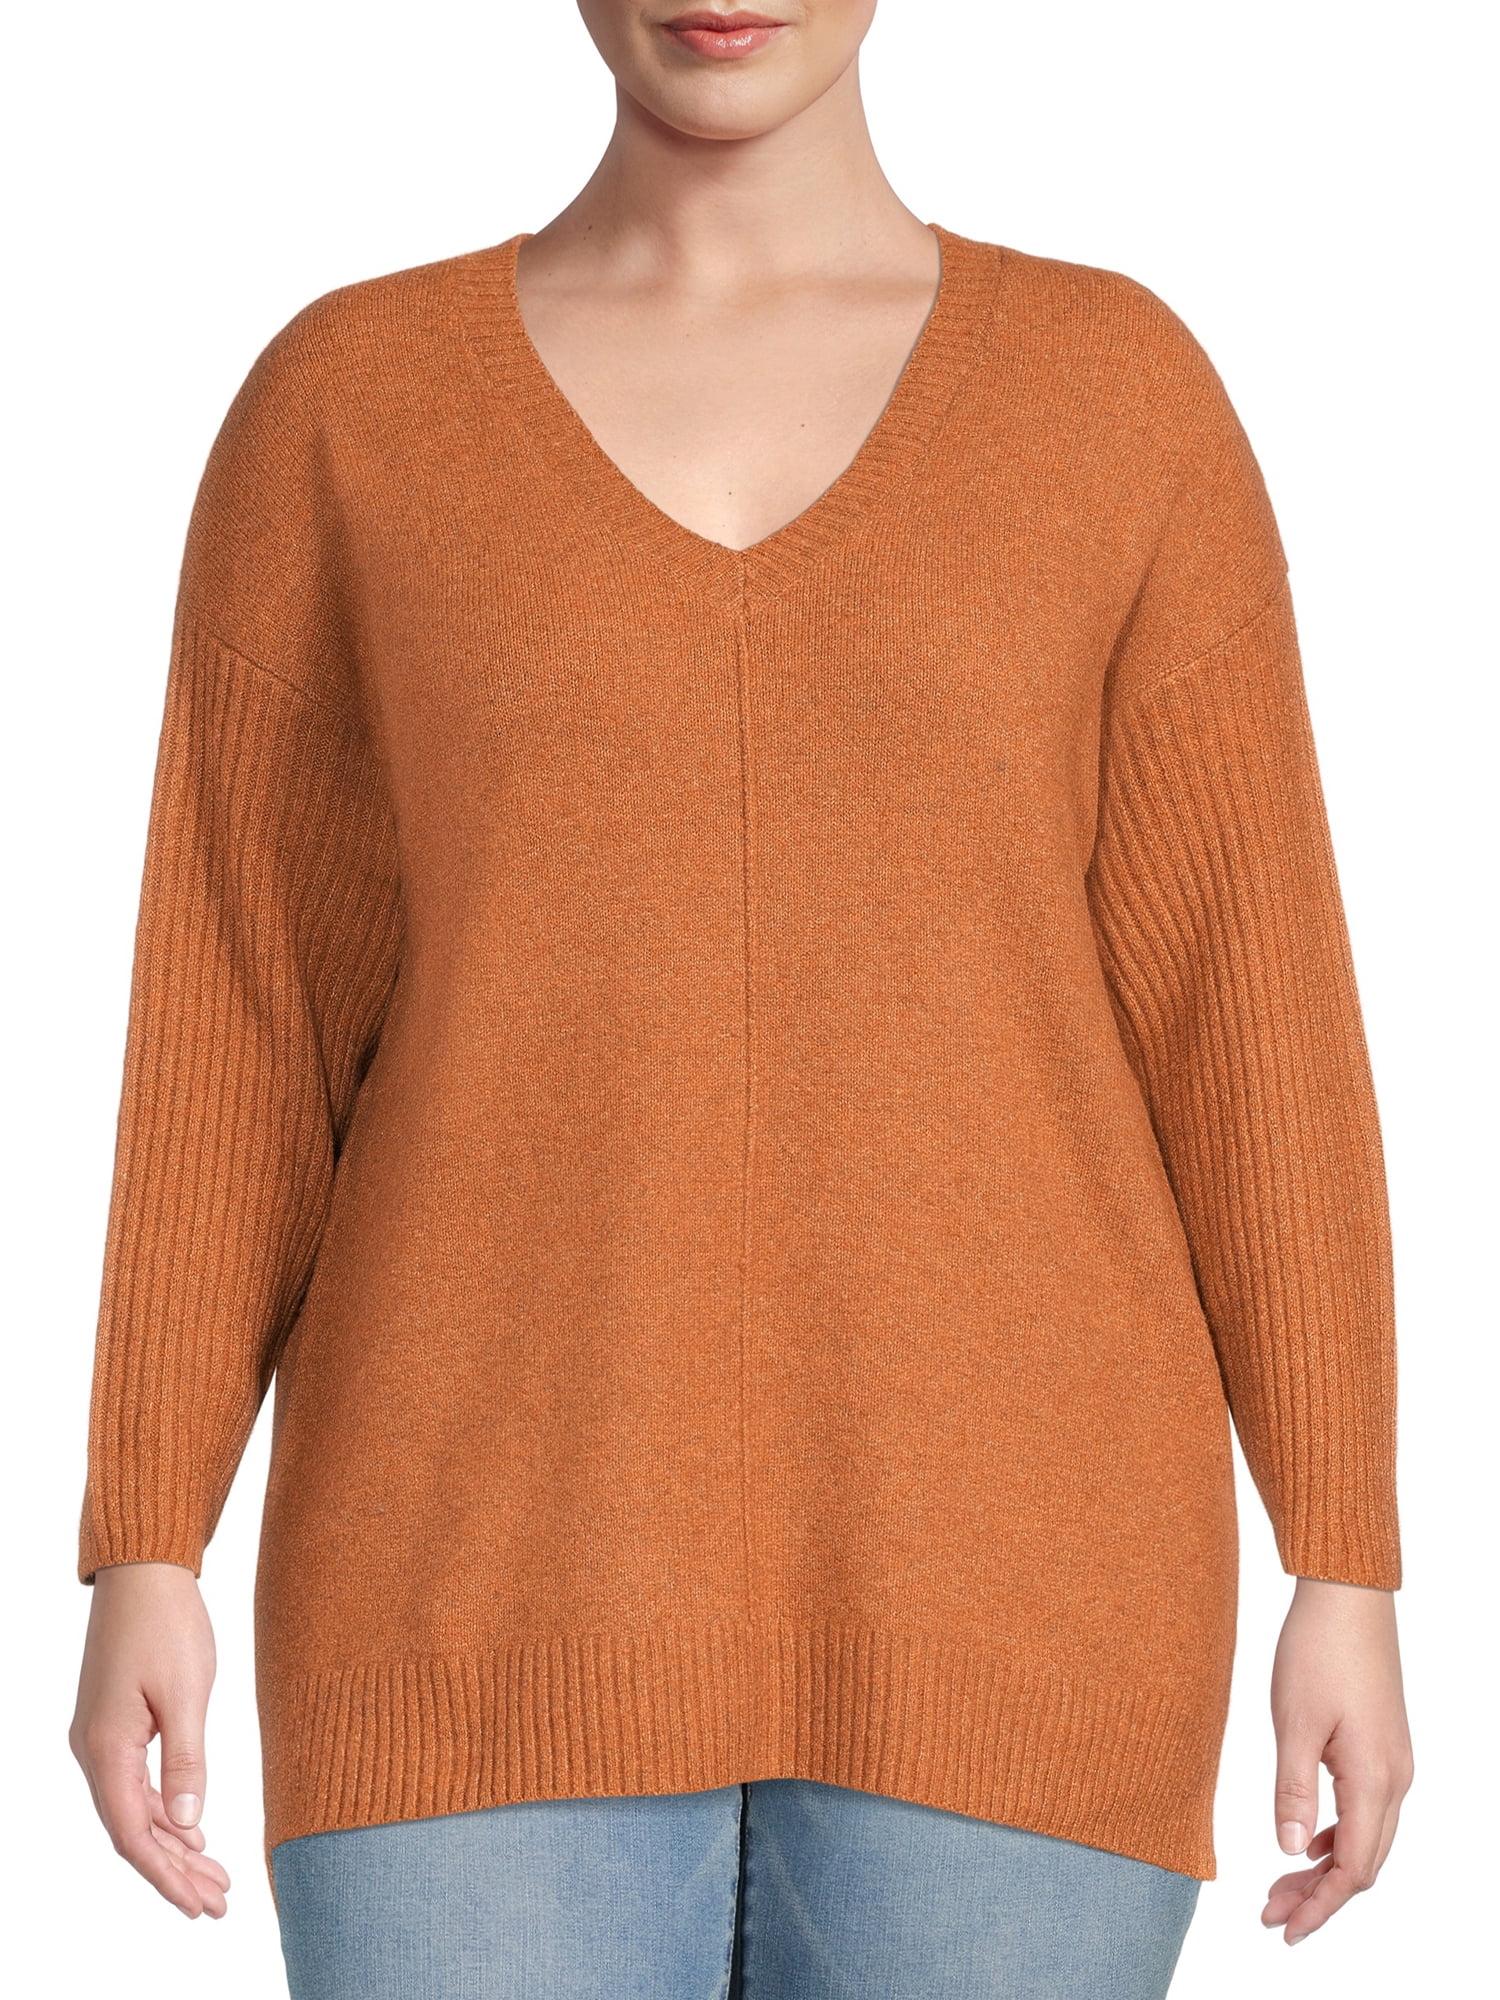 Terra & Sky Women’s Plus Size V-Neck Tunic Sweater